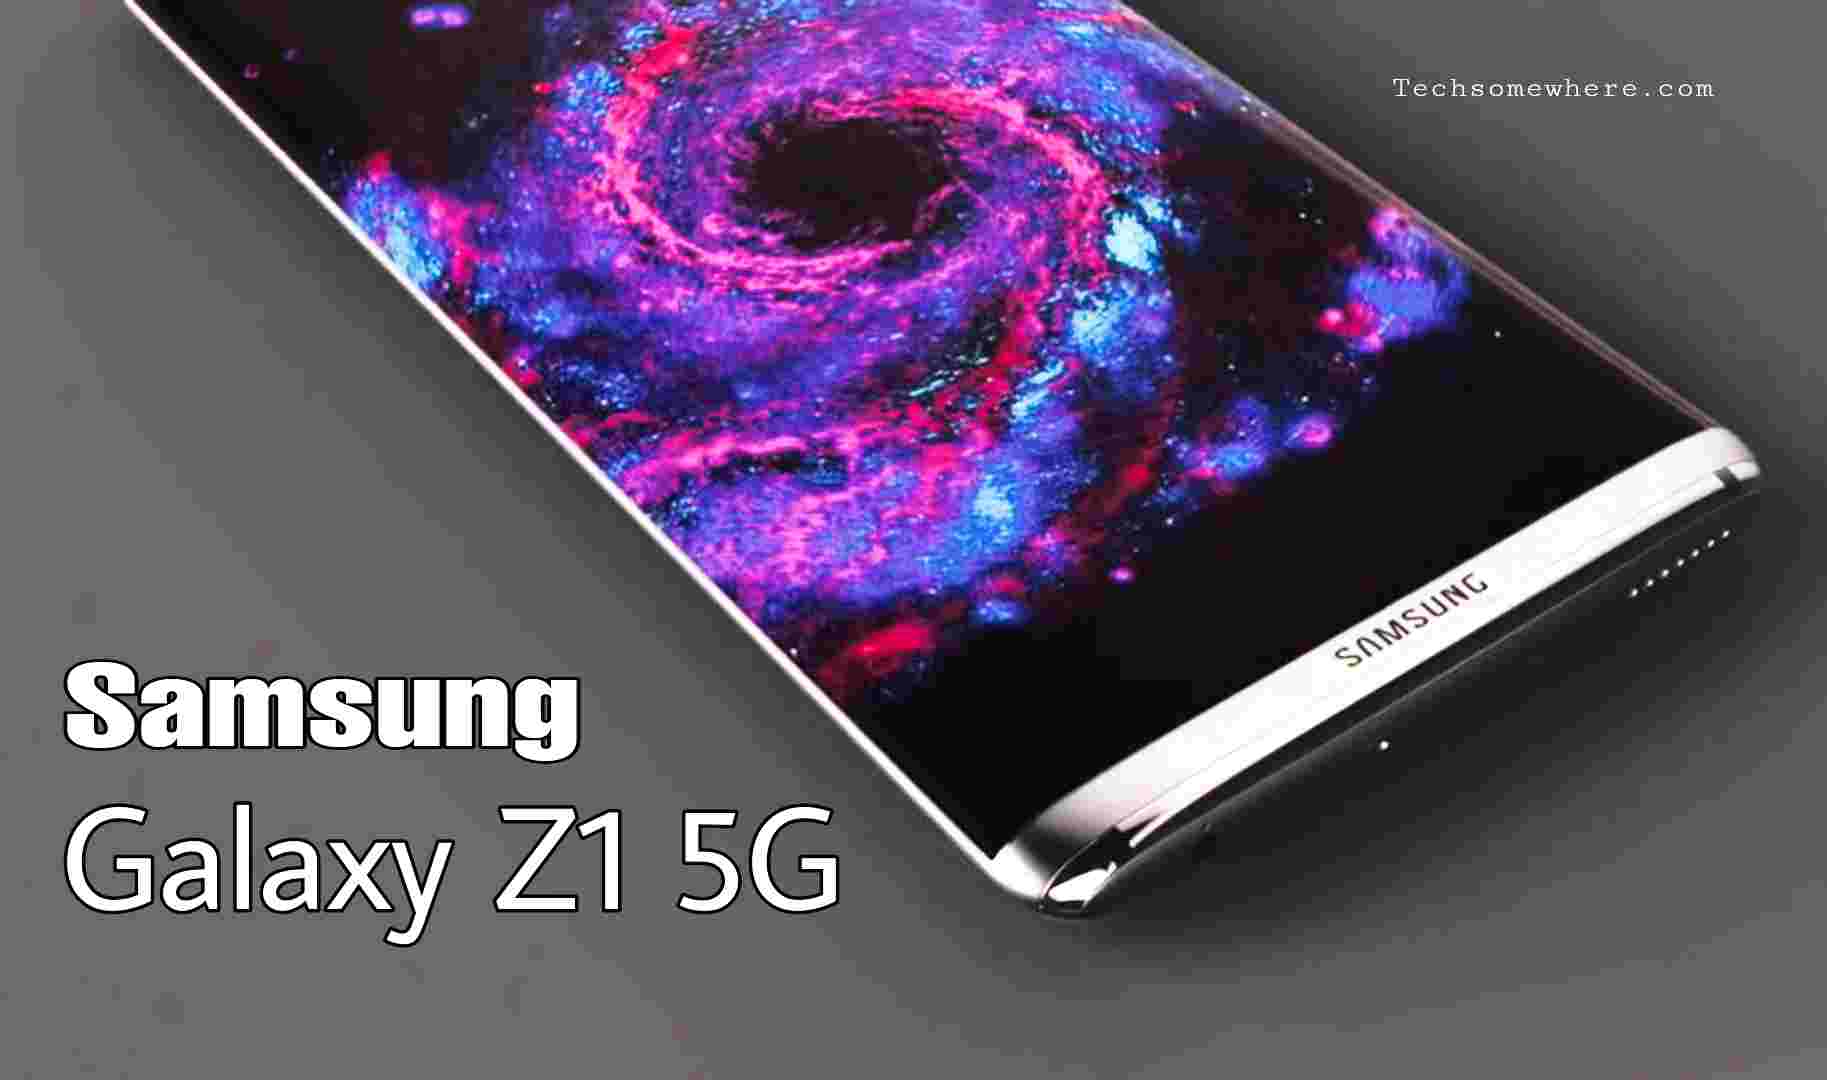 Samsung Galaxy Z1 5G - 108MP Camera, 7700mAh battery, Price, Full Specs & Release Date!